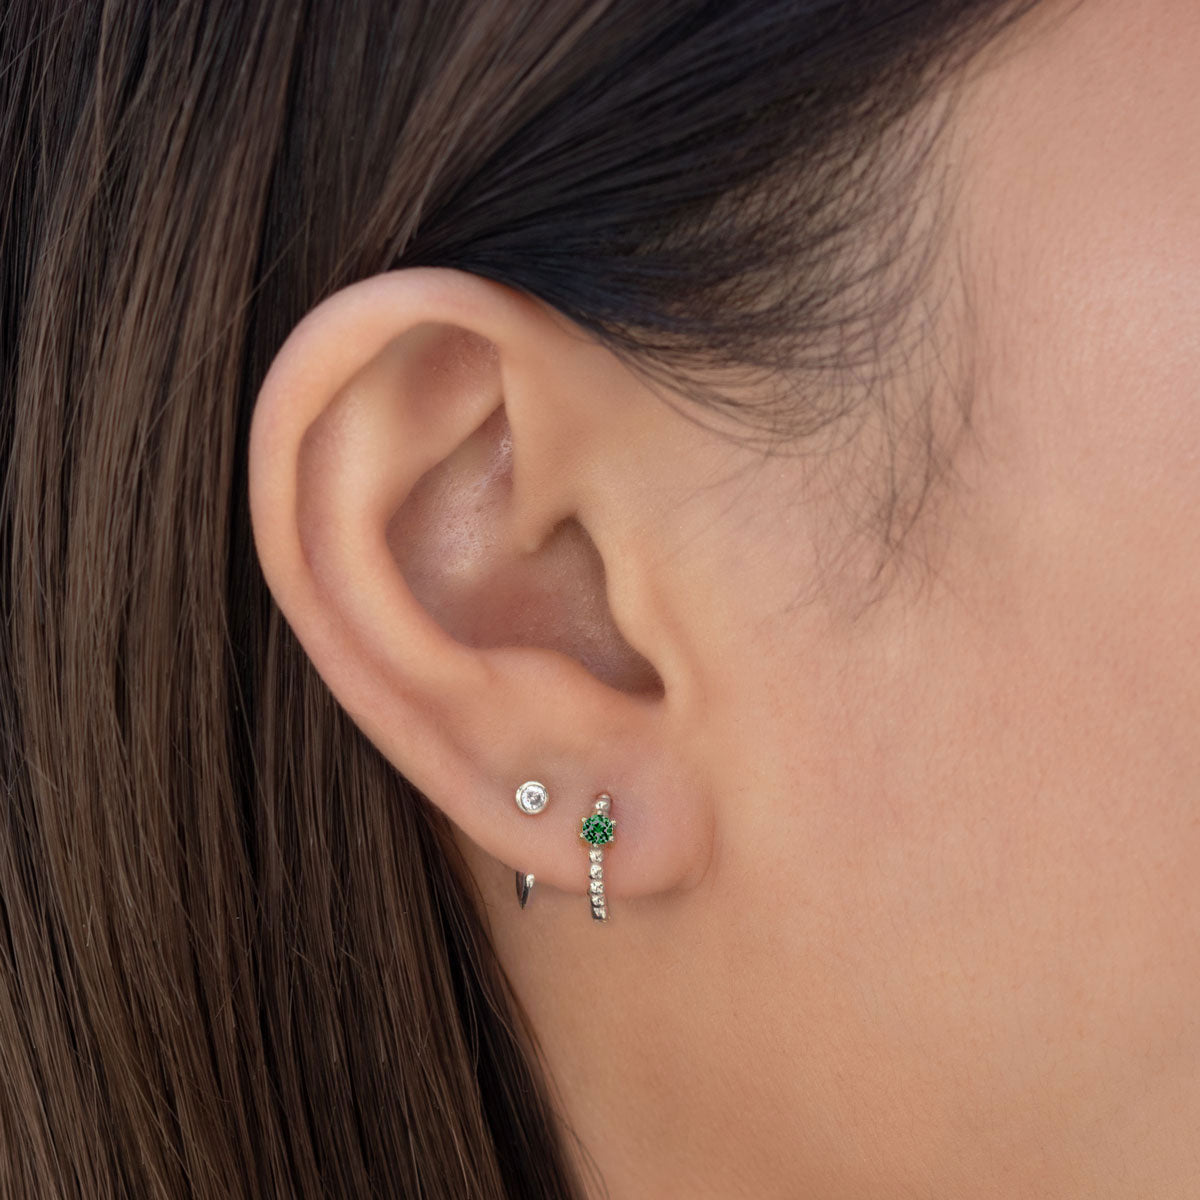 Gemstone Bead Huggies Emerald